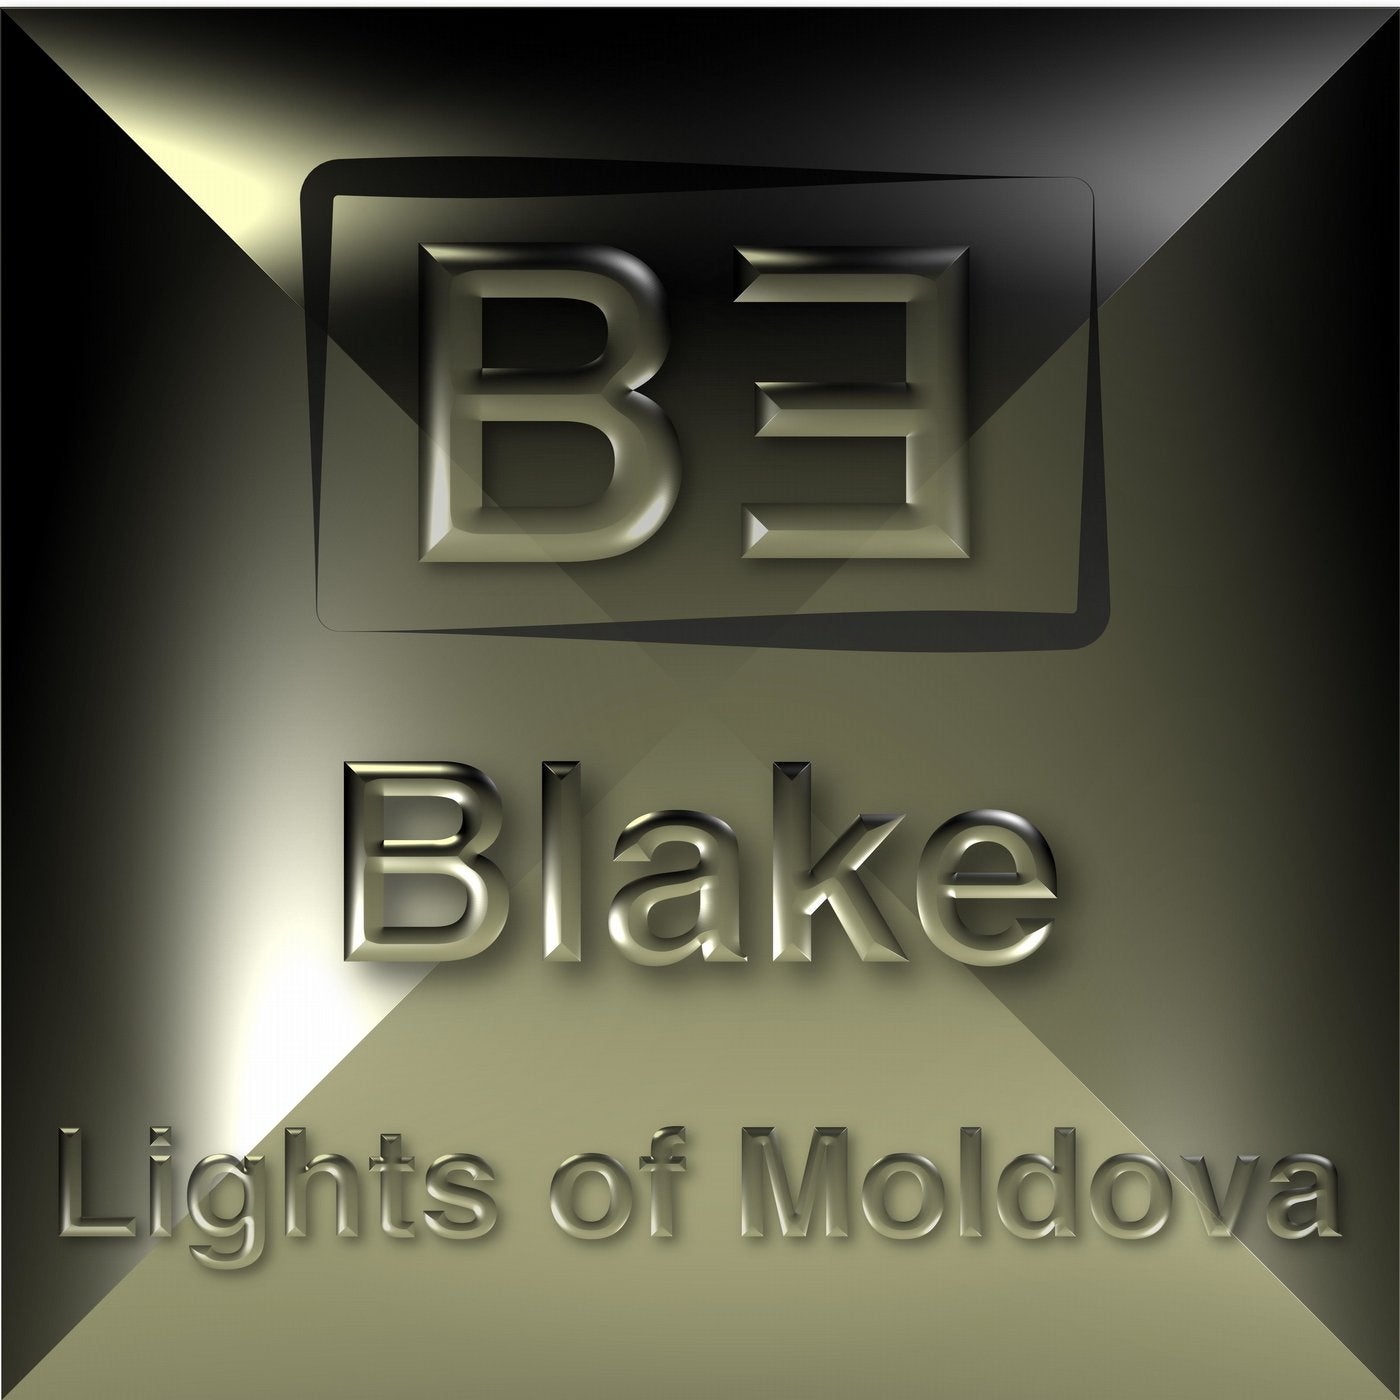 Lights of Moldova